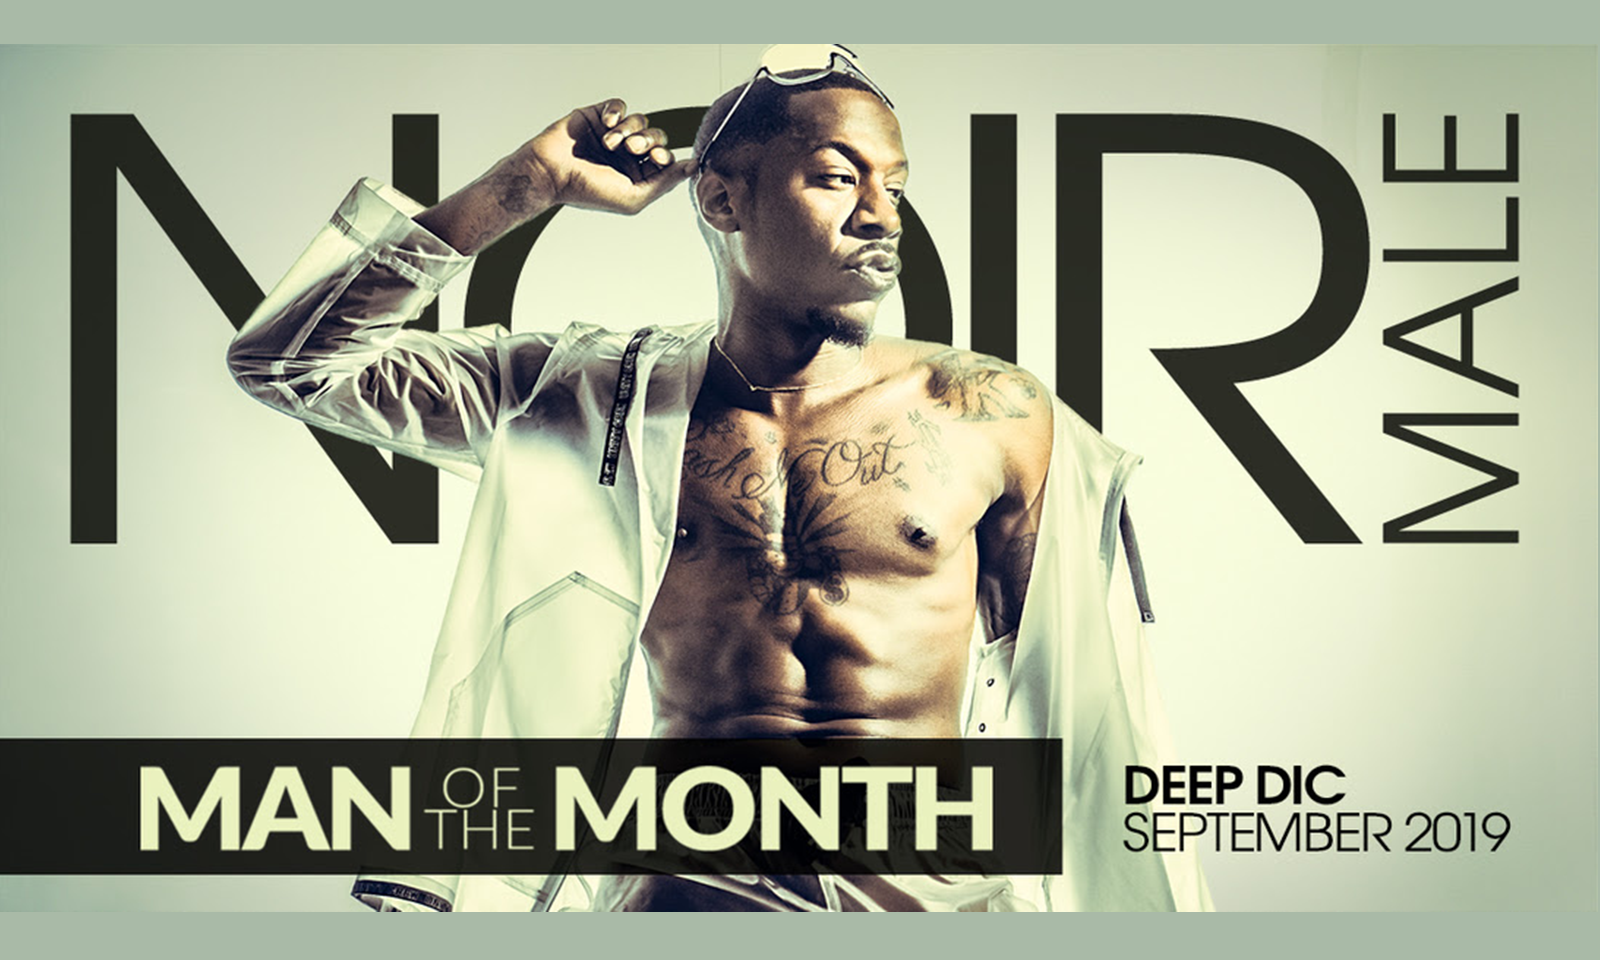 Deep Dic Named Noir Male's ‘Man Of The Month’ For September